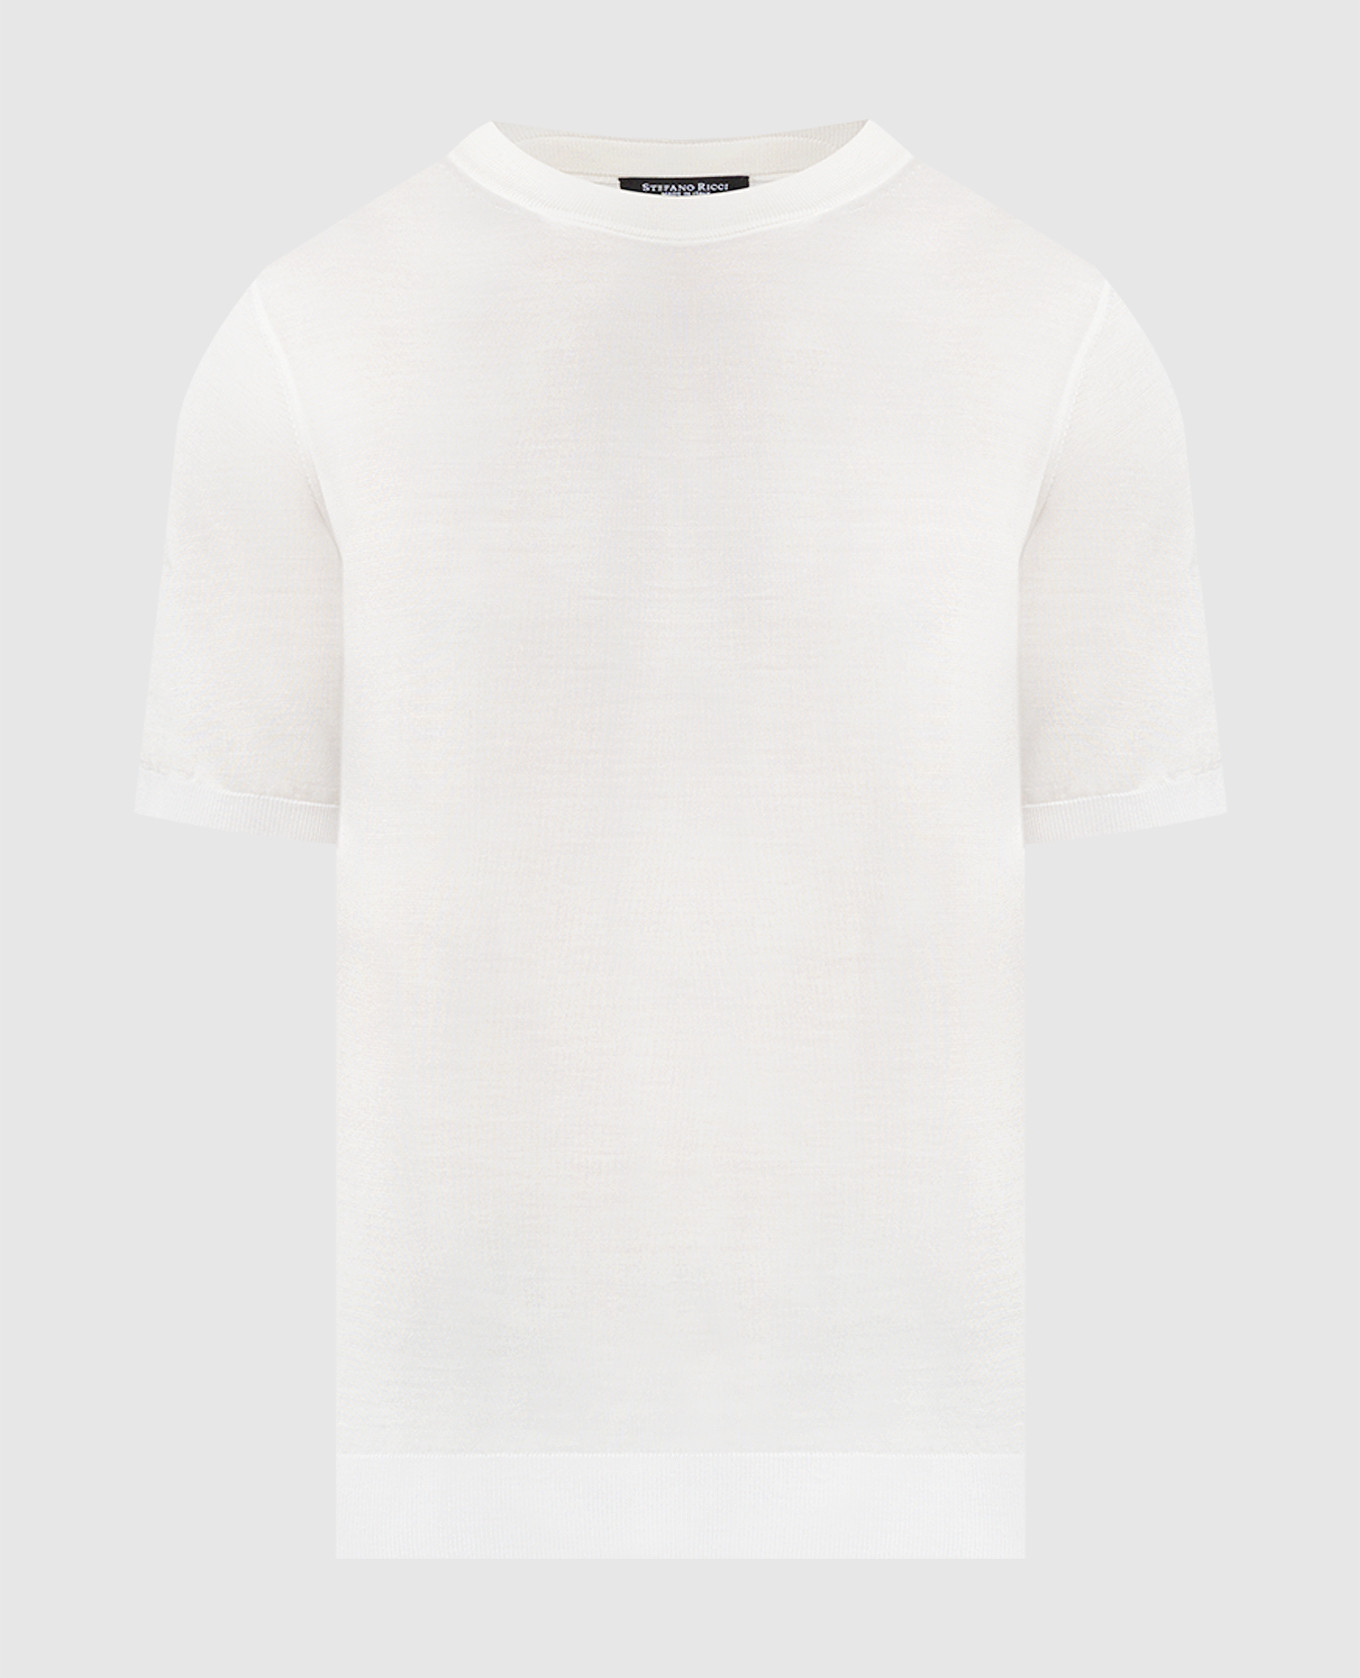 Camiseta de seda blanca con logo.